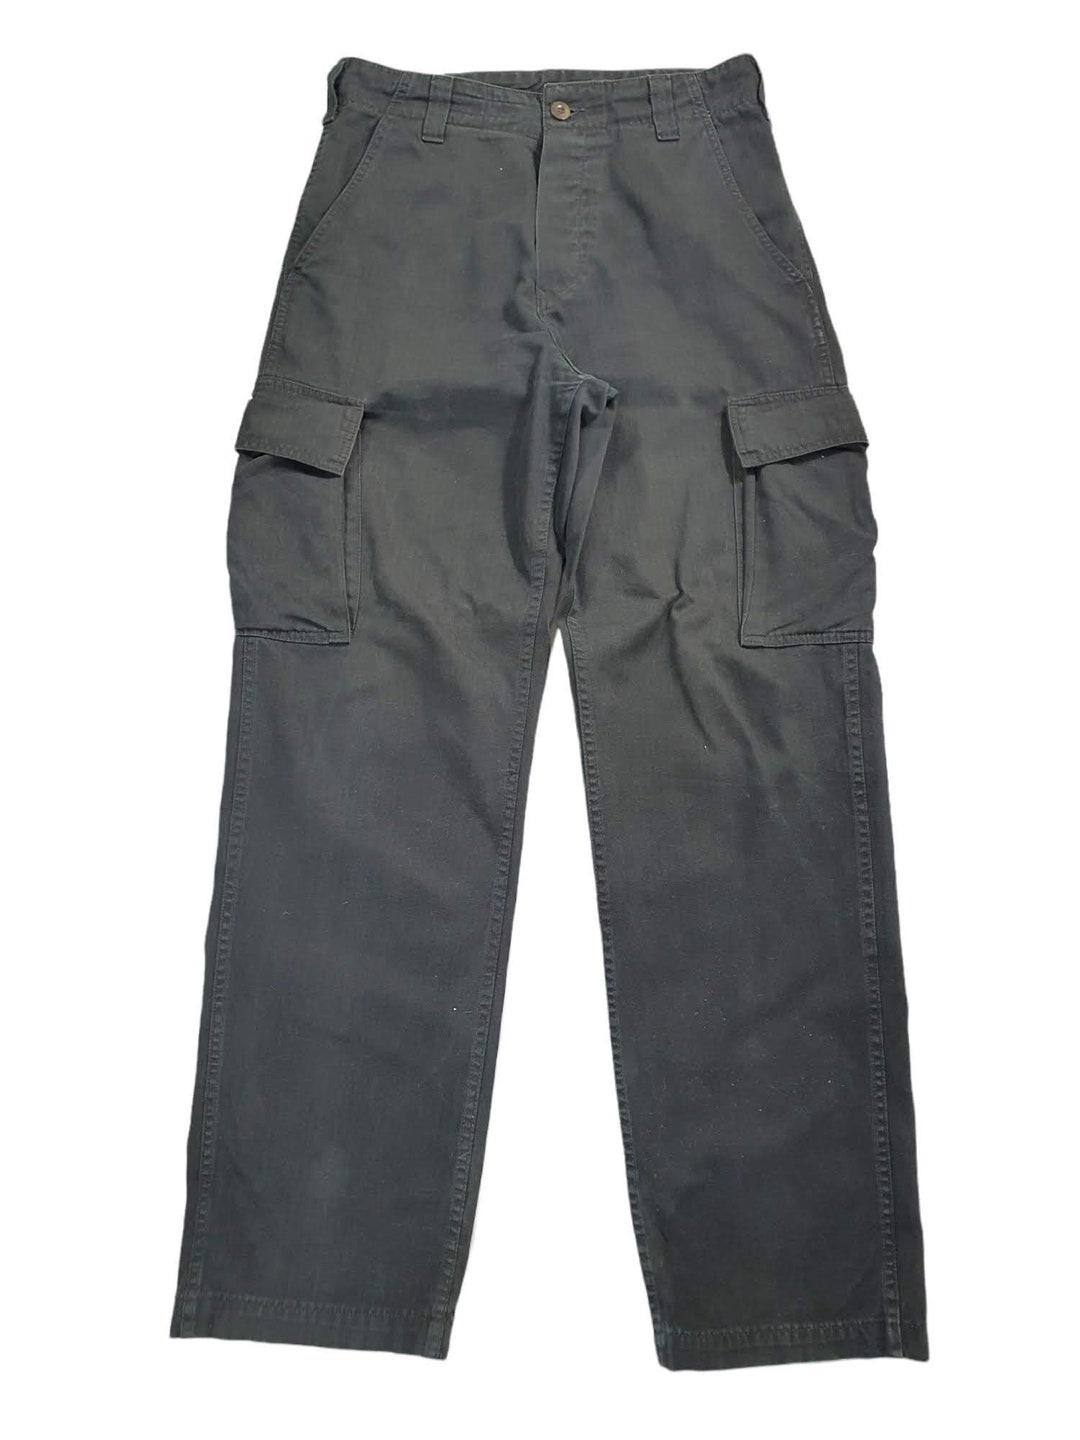 Vintage Mens Carhartt Pants , Dark Blue Cargo Pants 38x34, Dark